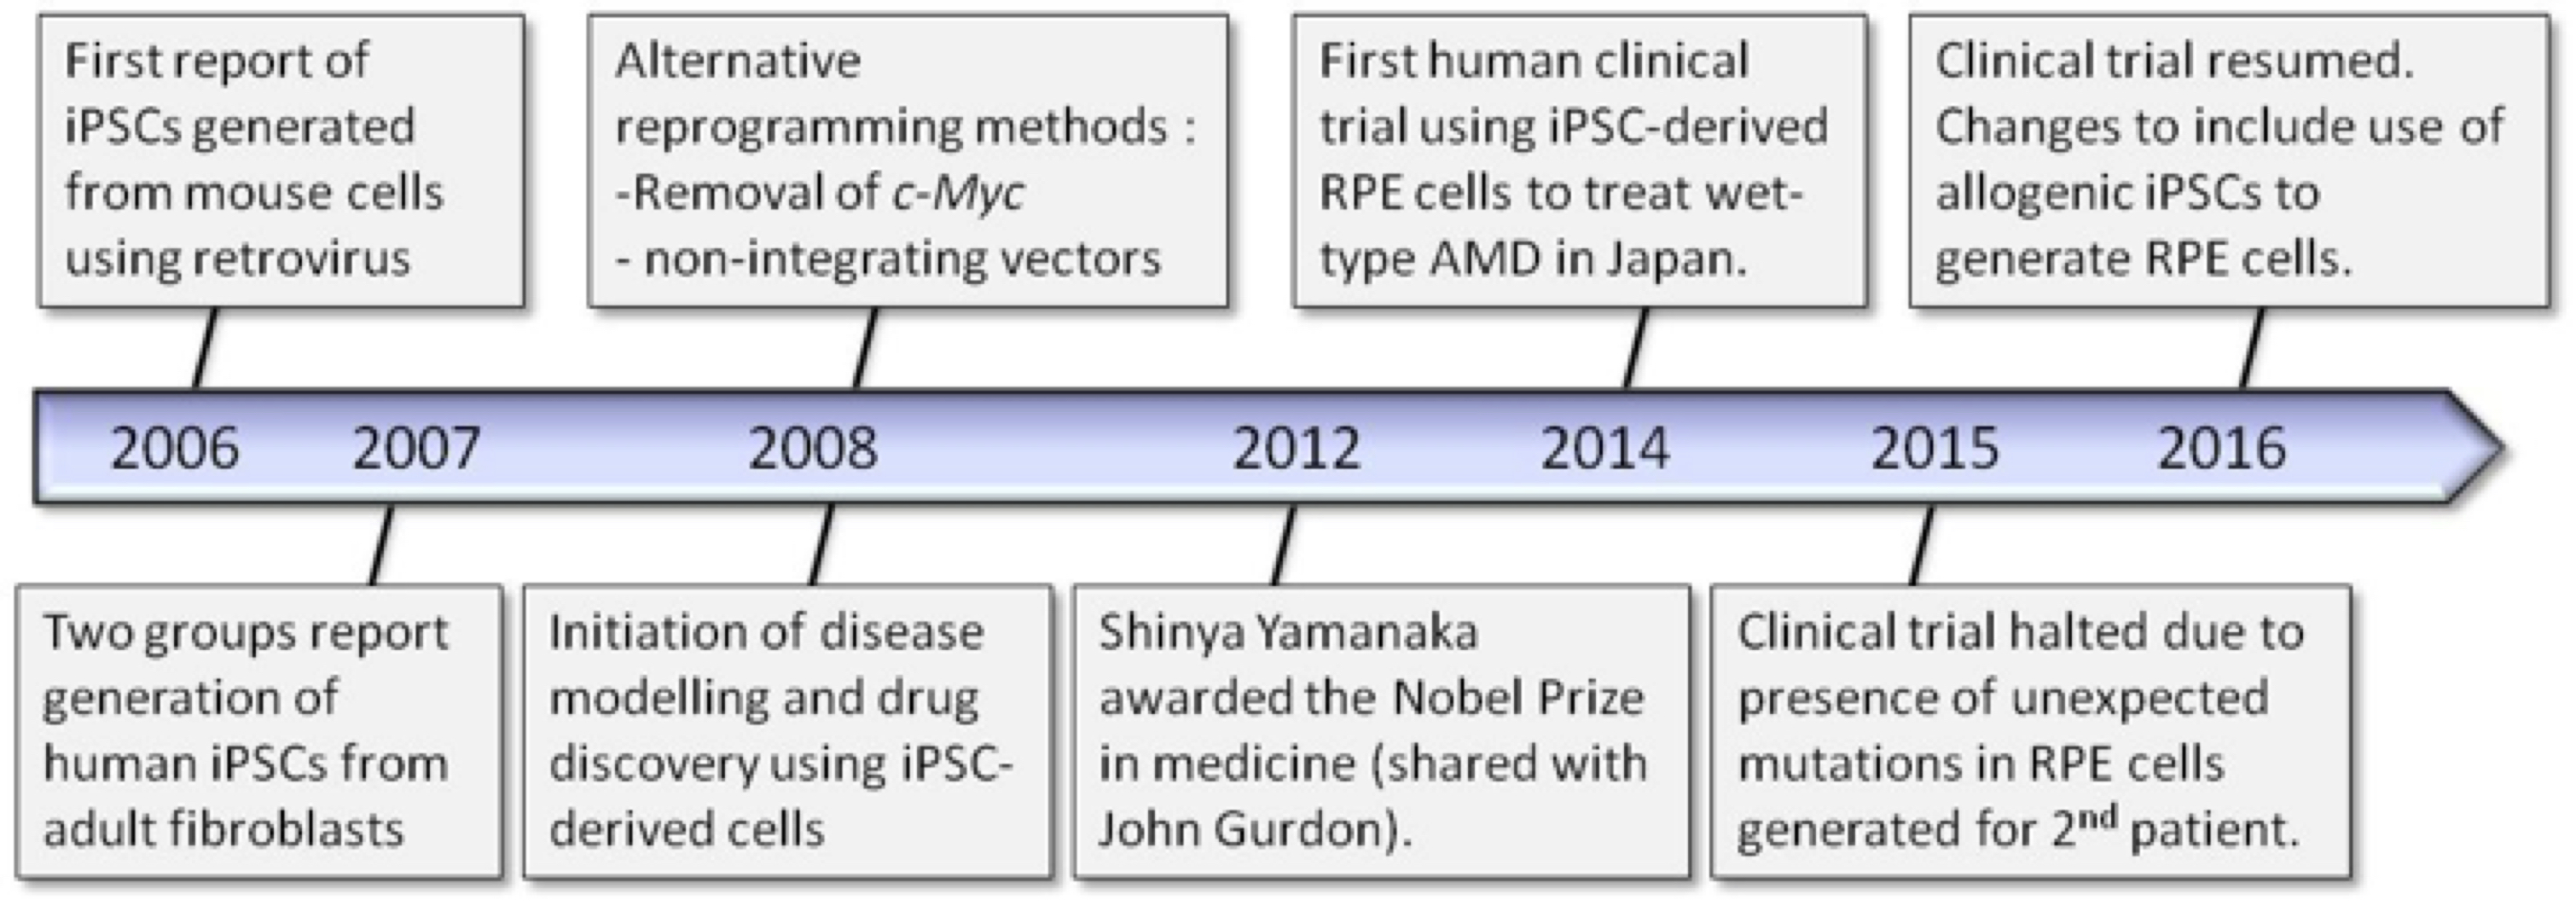 Induced Pluripotent Stem Cells Timeline